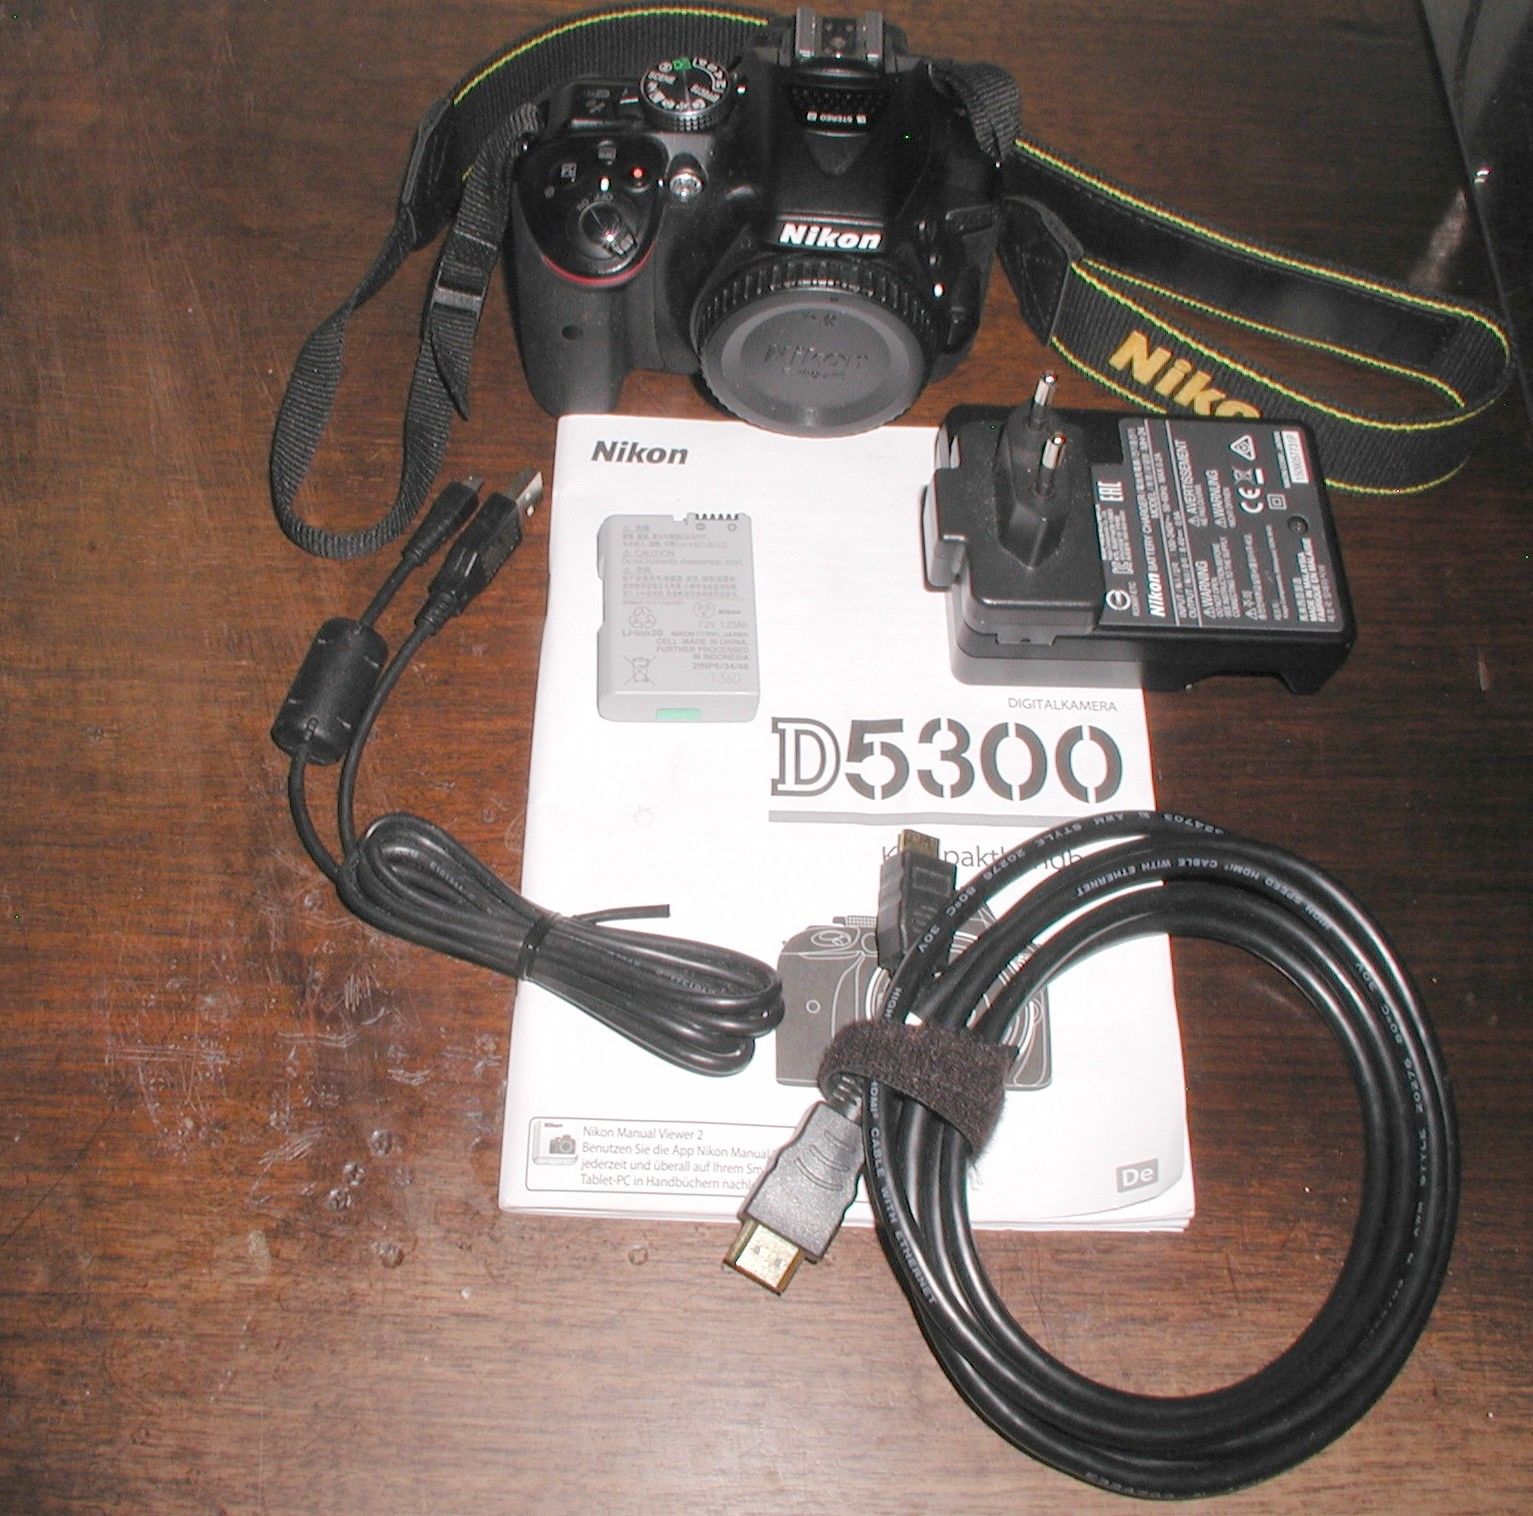 Nikon D D5300 24.2 MP SLR-Digitalkamera - Schwarz (Nur Gehäuse)